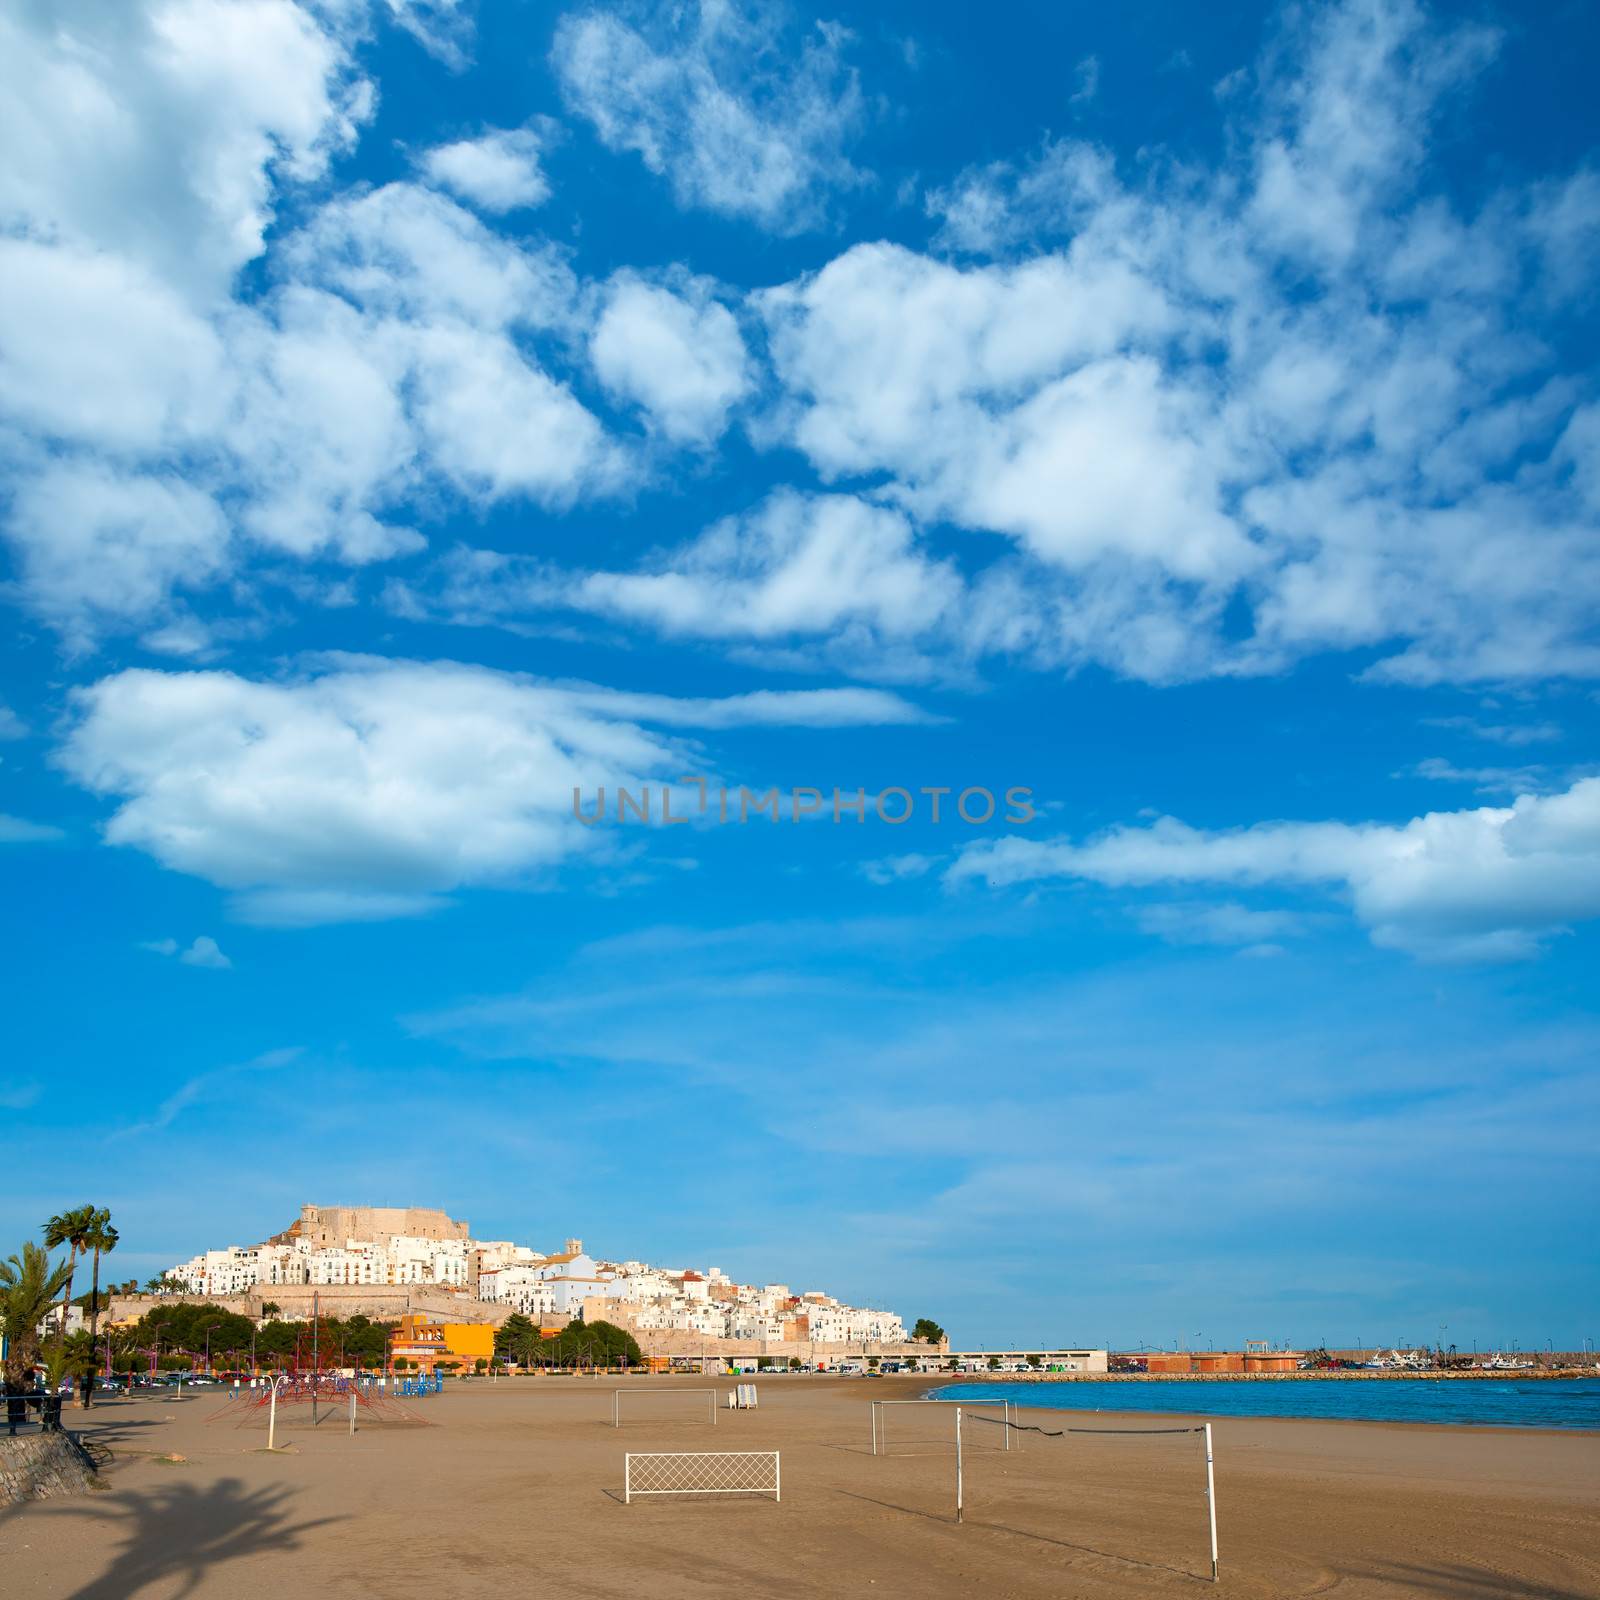 Peniscola Castle and beach in Castellon Spain by lunamarina